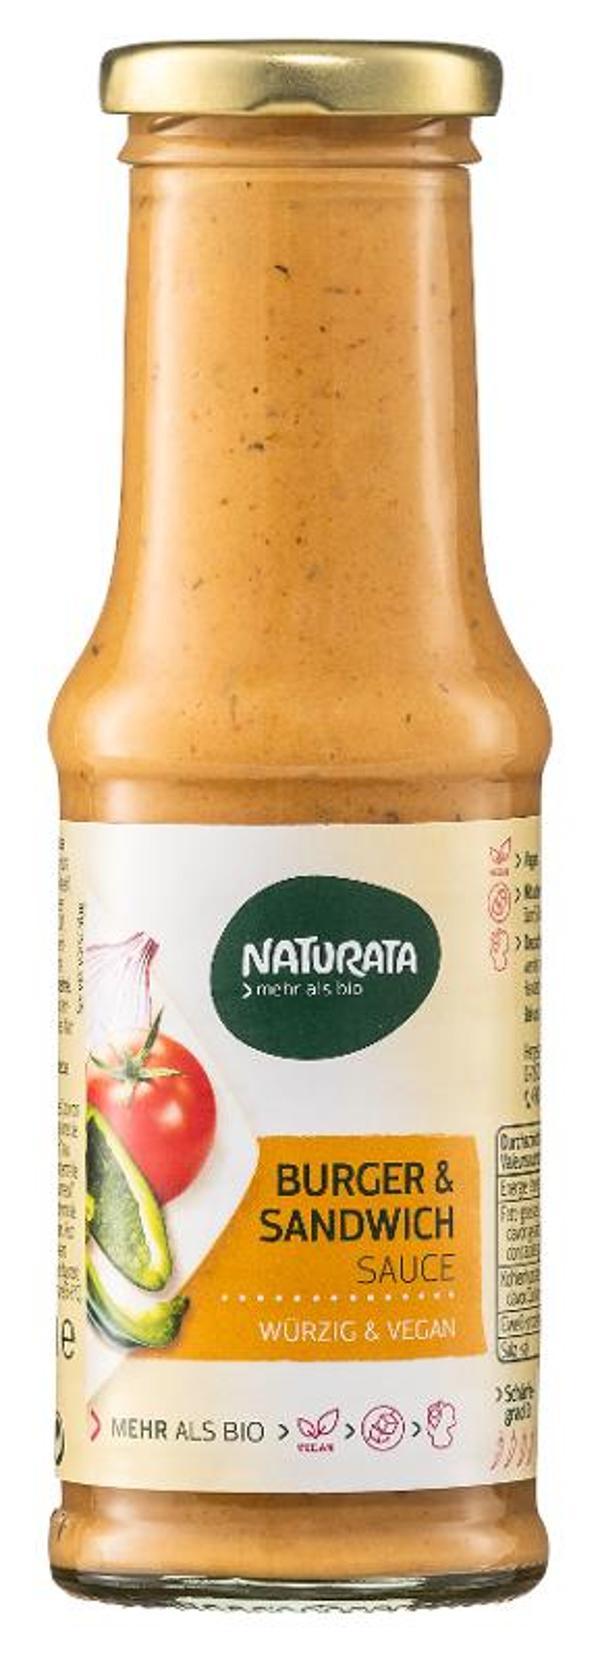 Produktfoto zu Naturata Burger Sandwich Sauce - 210ml